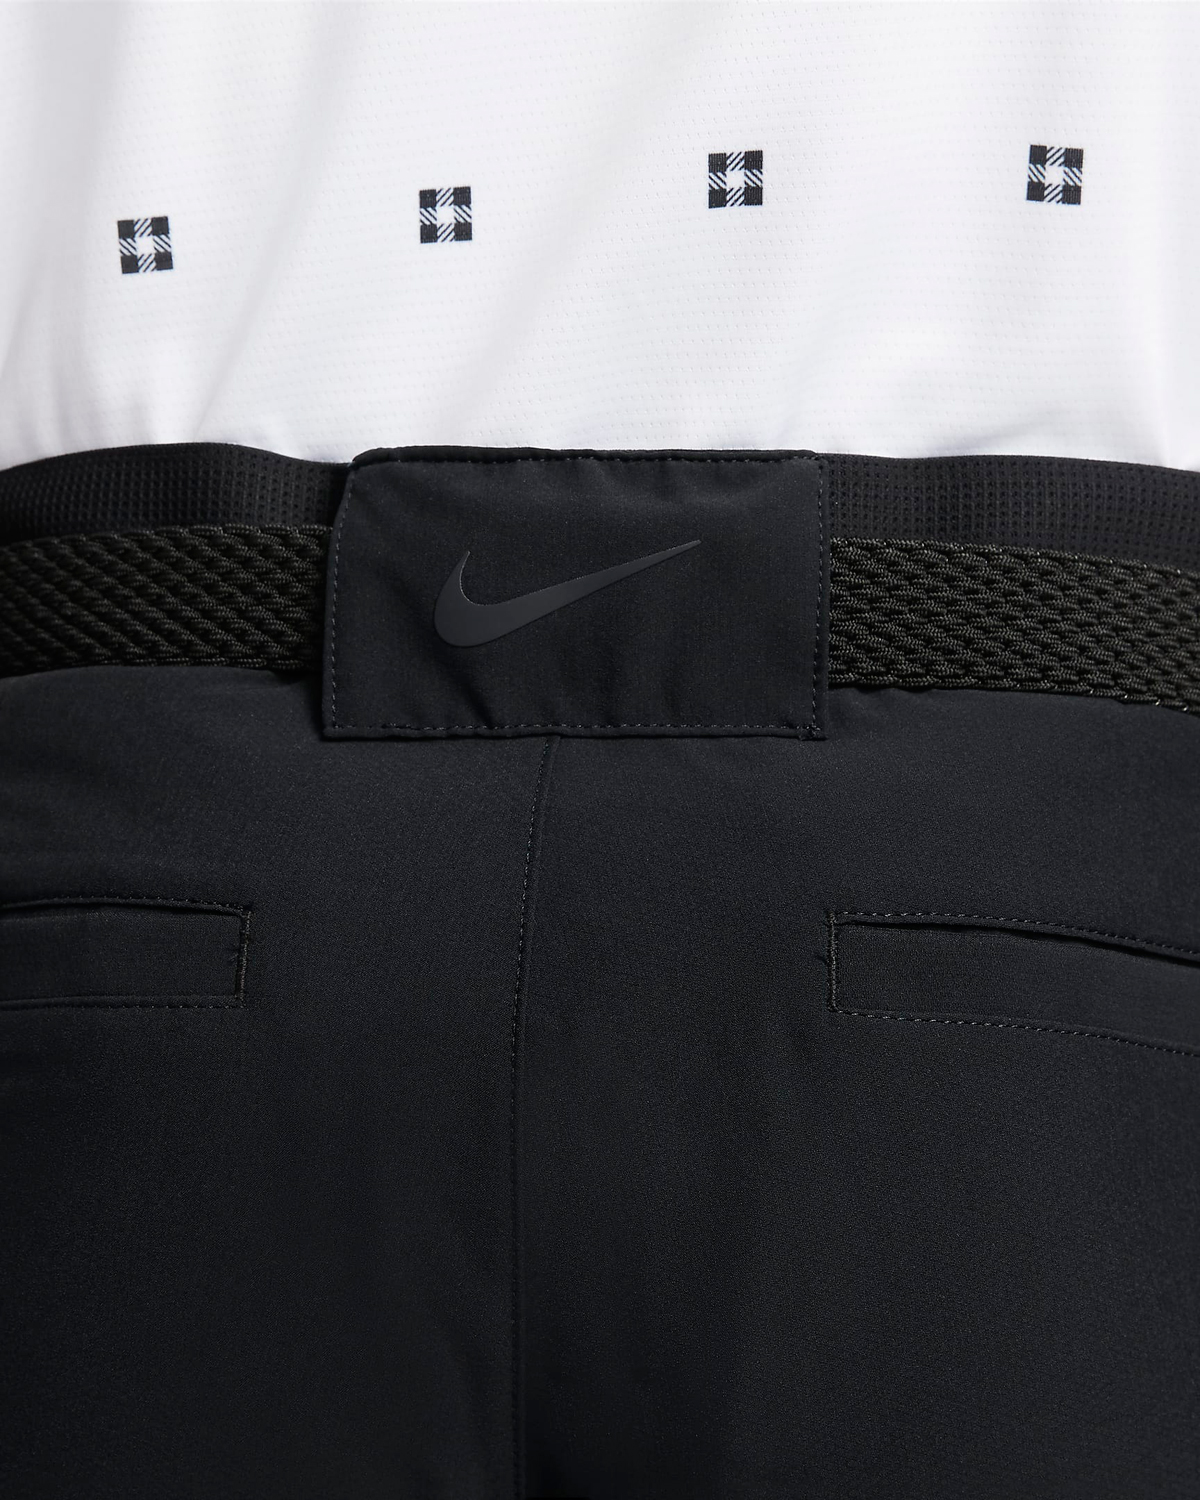 Nike-Vapor-Slim-Fit-Golf-Pants-Black-2